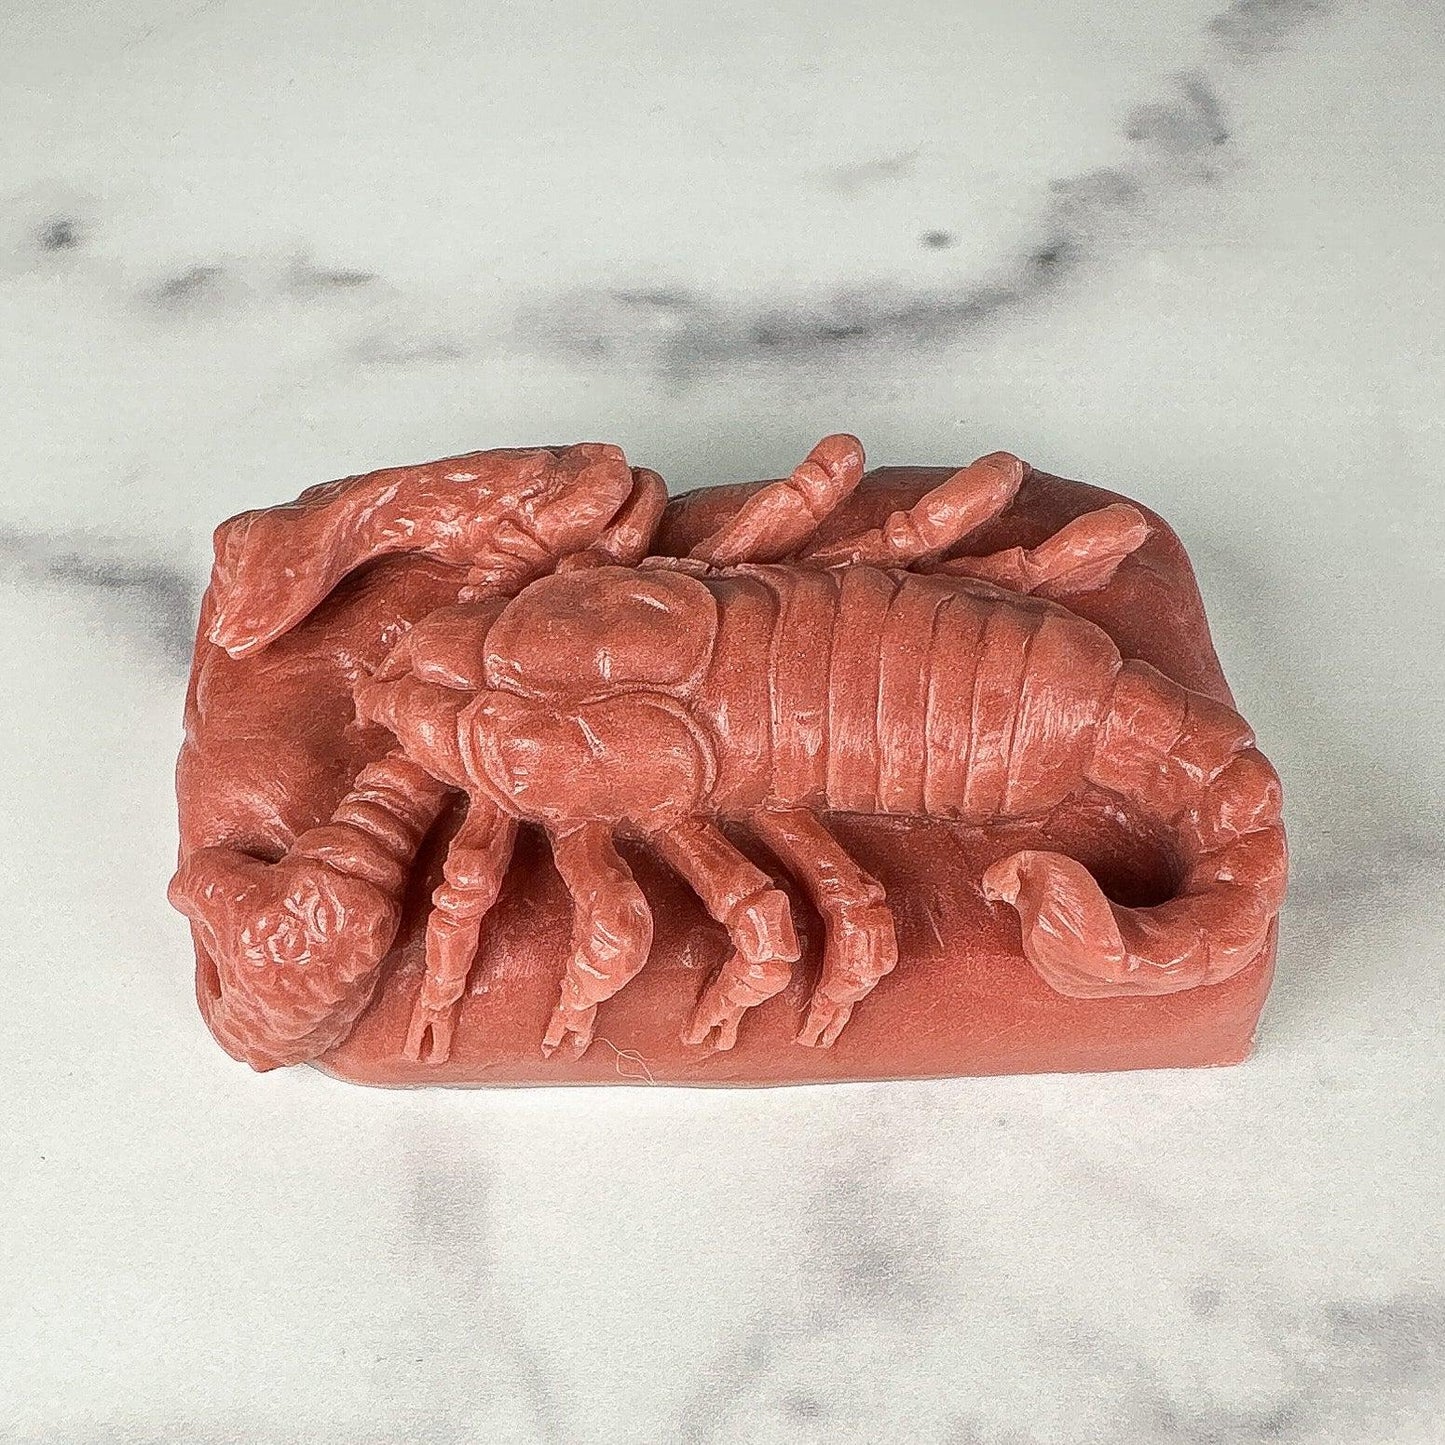 Scorpion Soap Bar - The Serpentry